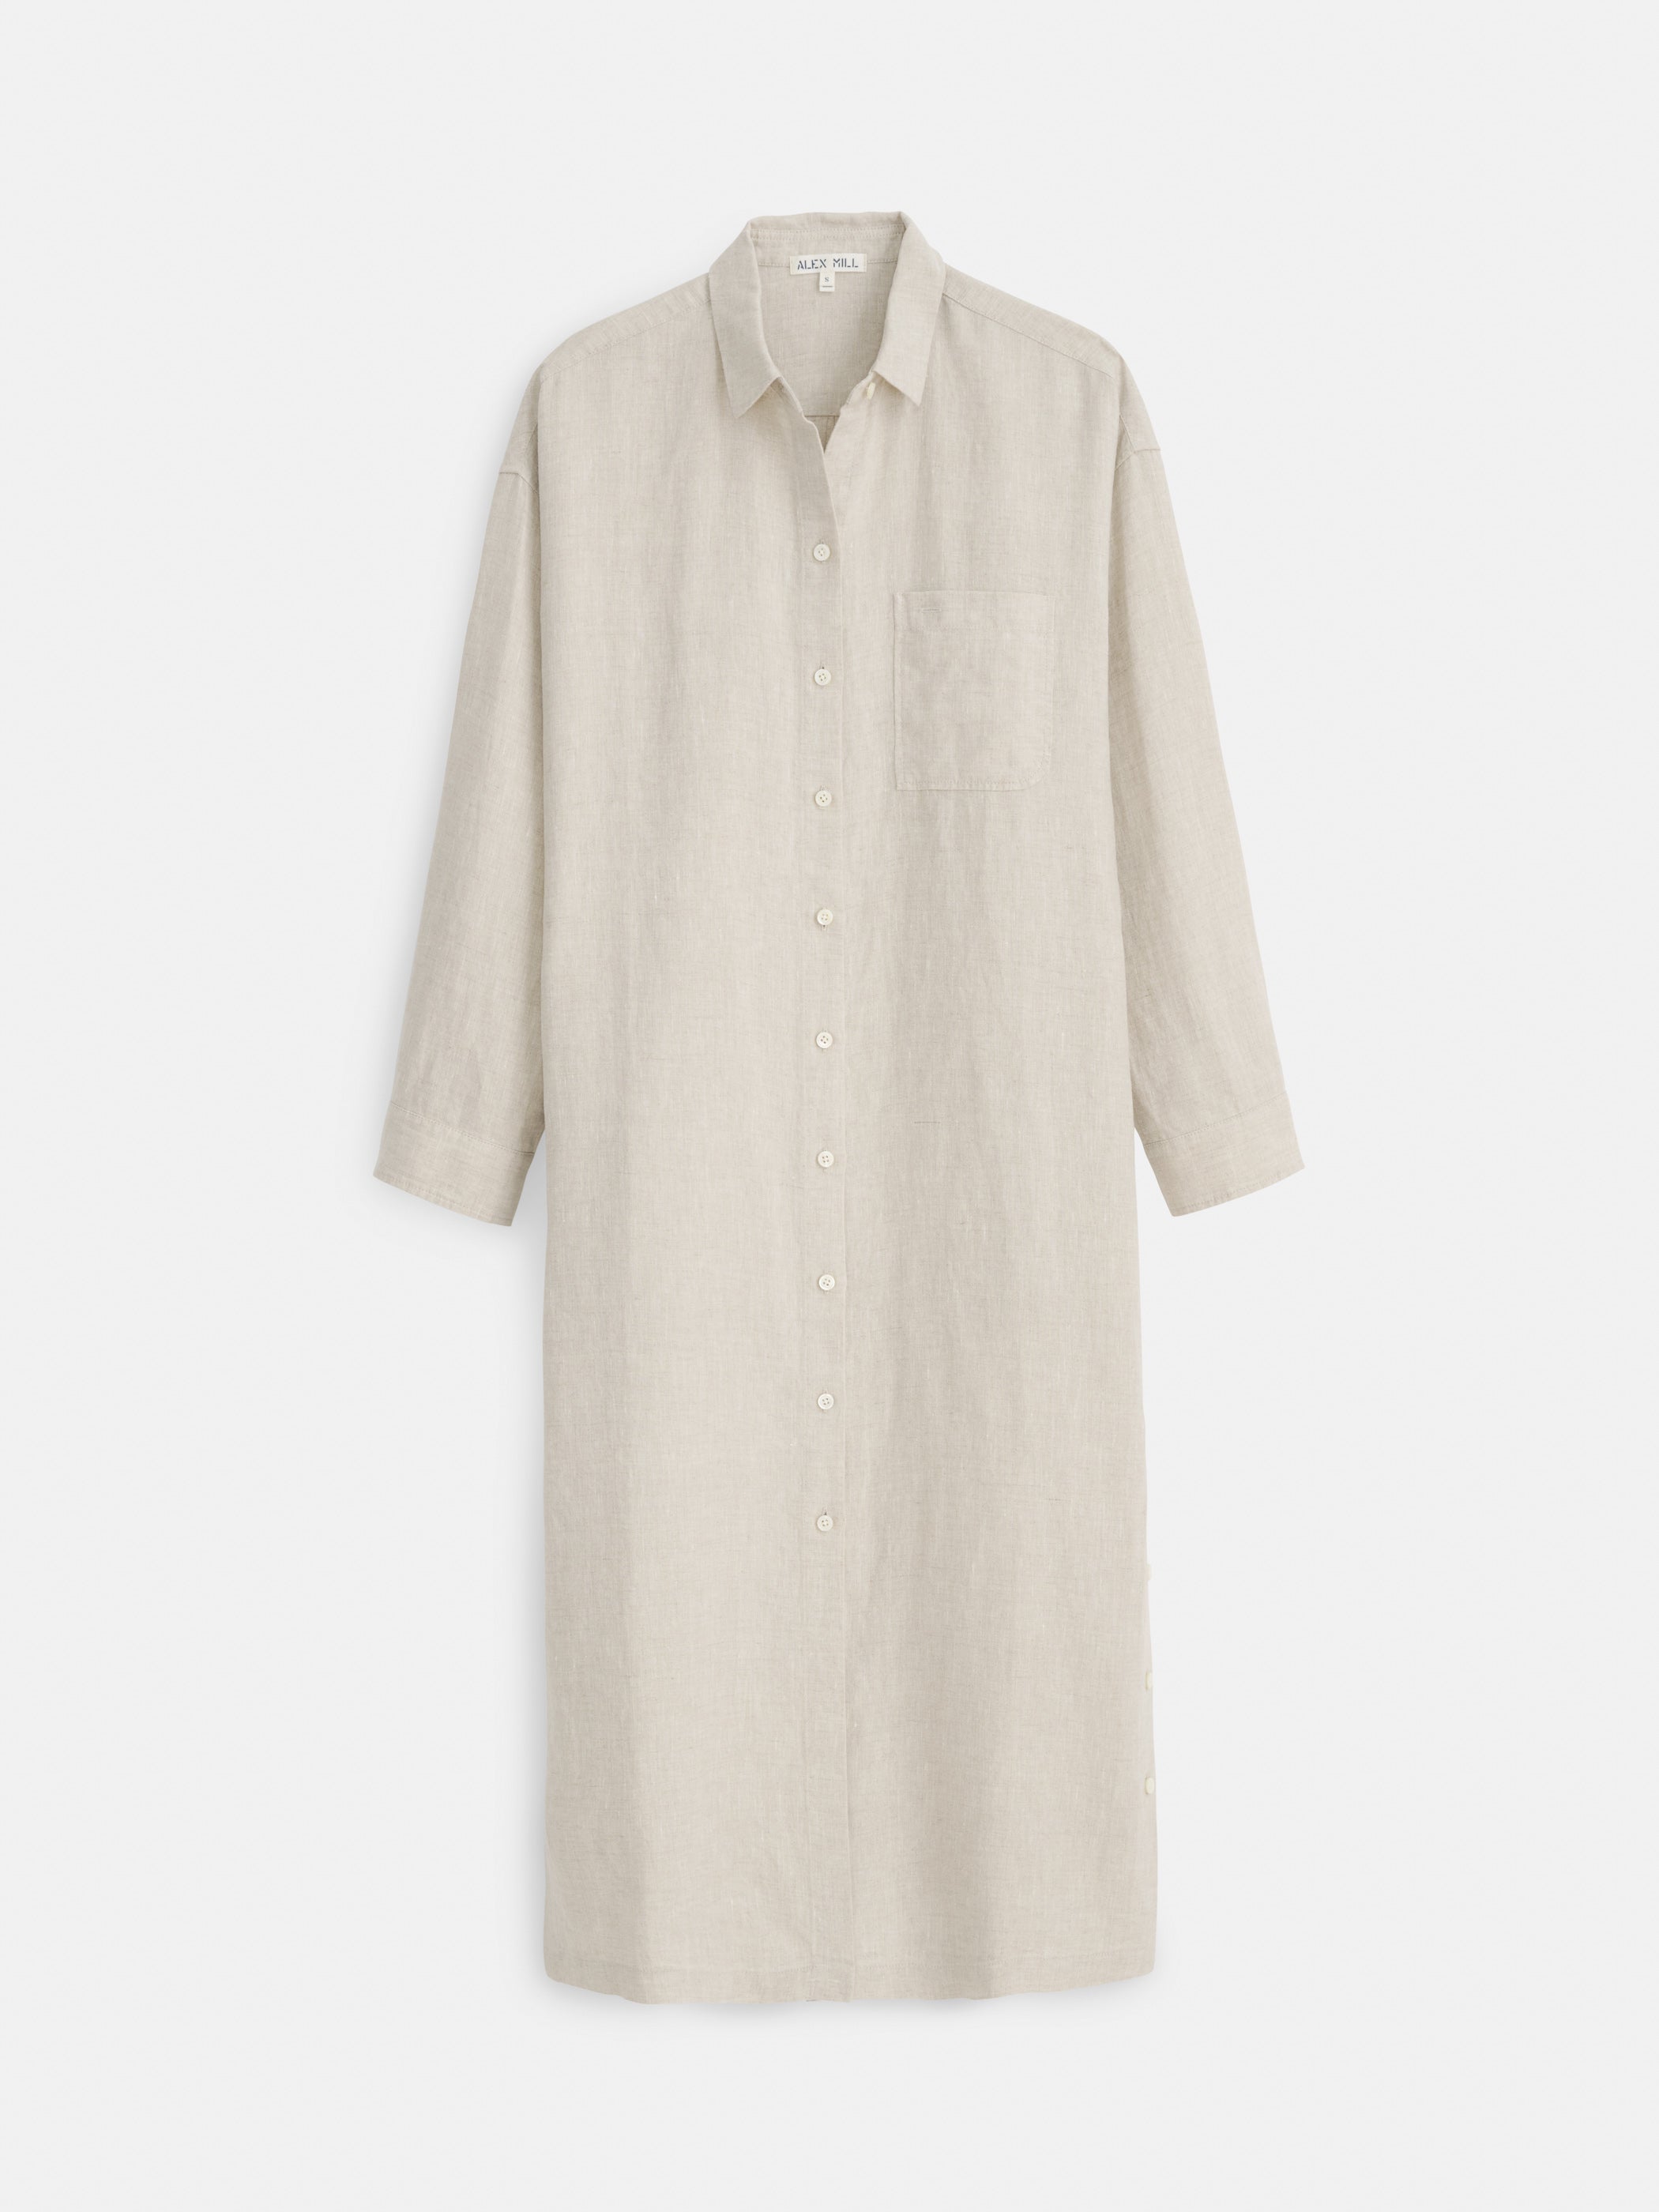 Alex Mill Kerry Shirtdress In Flax Linen In Neutral